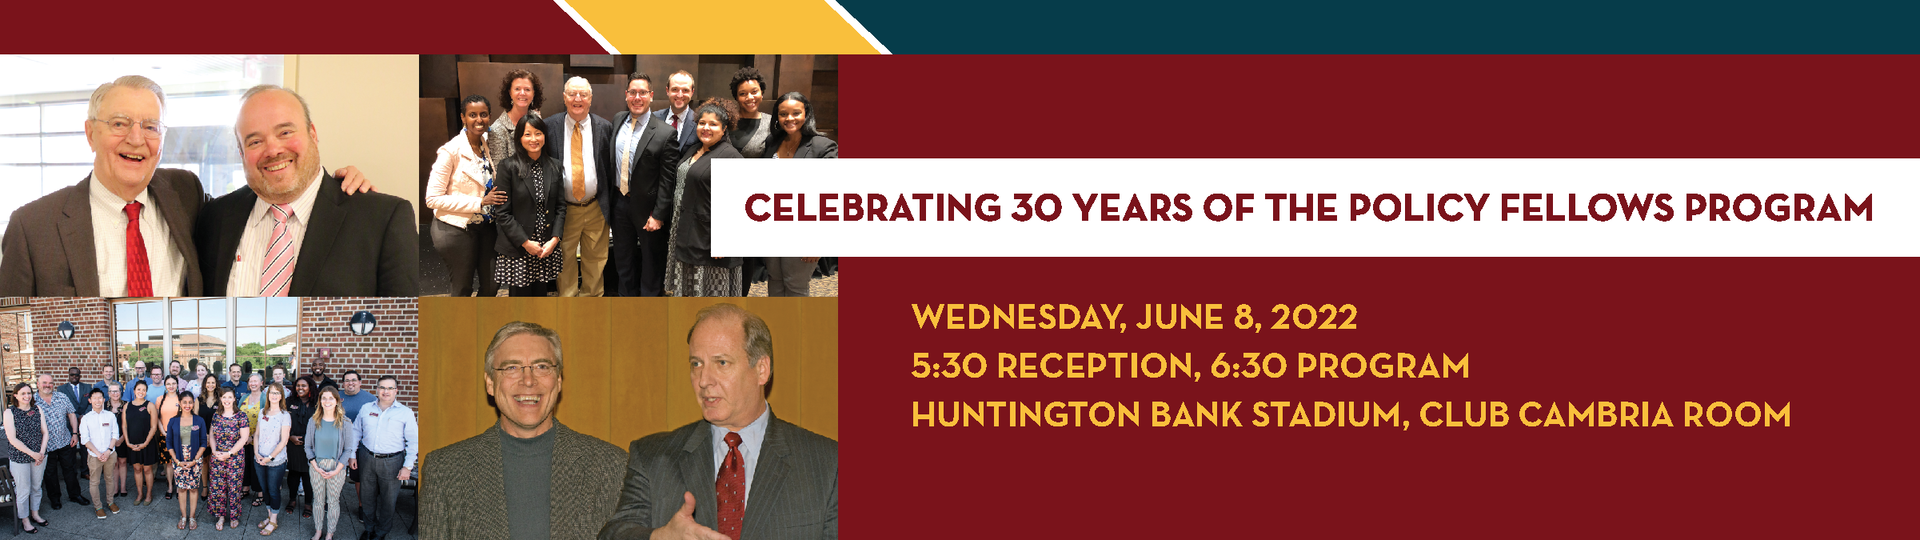 Celebrating 30 Years of the Policy Fellows Program. Wednesday, June 8, 2022. 5:30 Reception, 6:30 Program. Huntington Bank Stadium, Club Cambria Room.